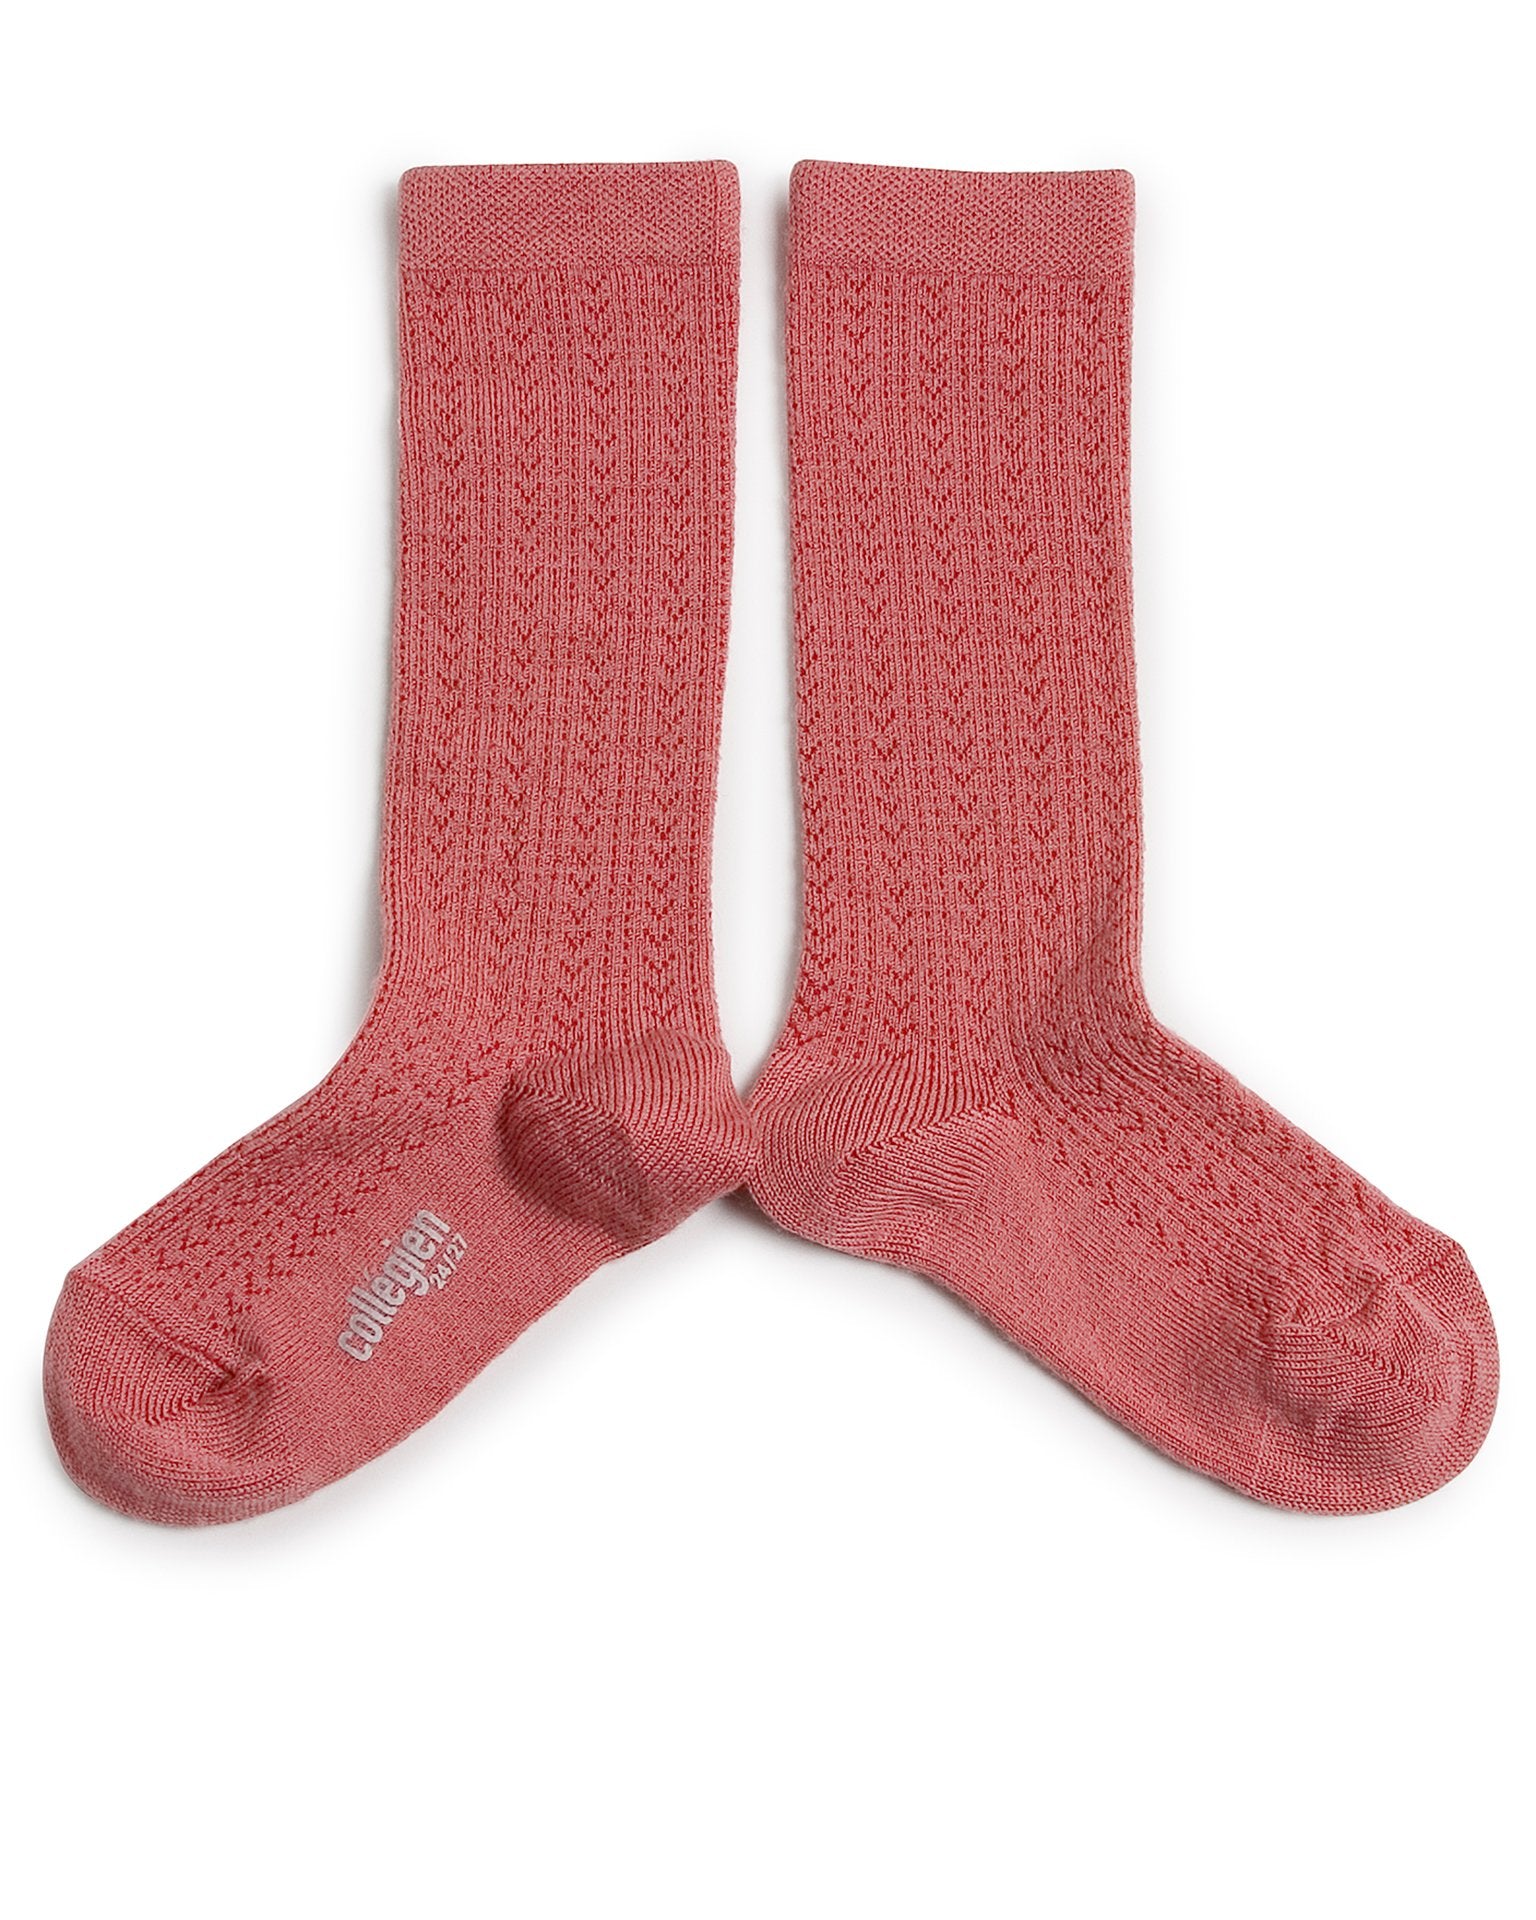 Little collegien accessories adèle knee socks in rose litchi